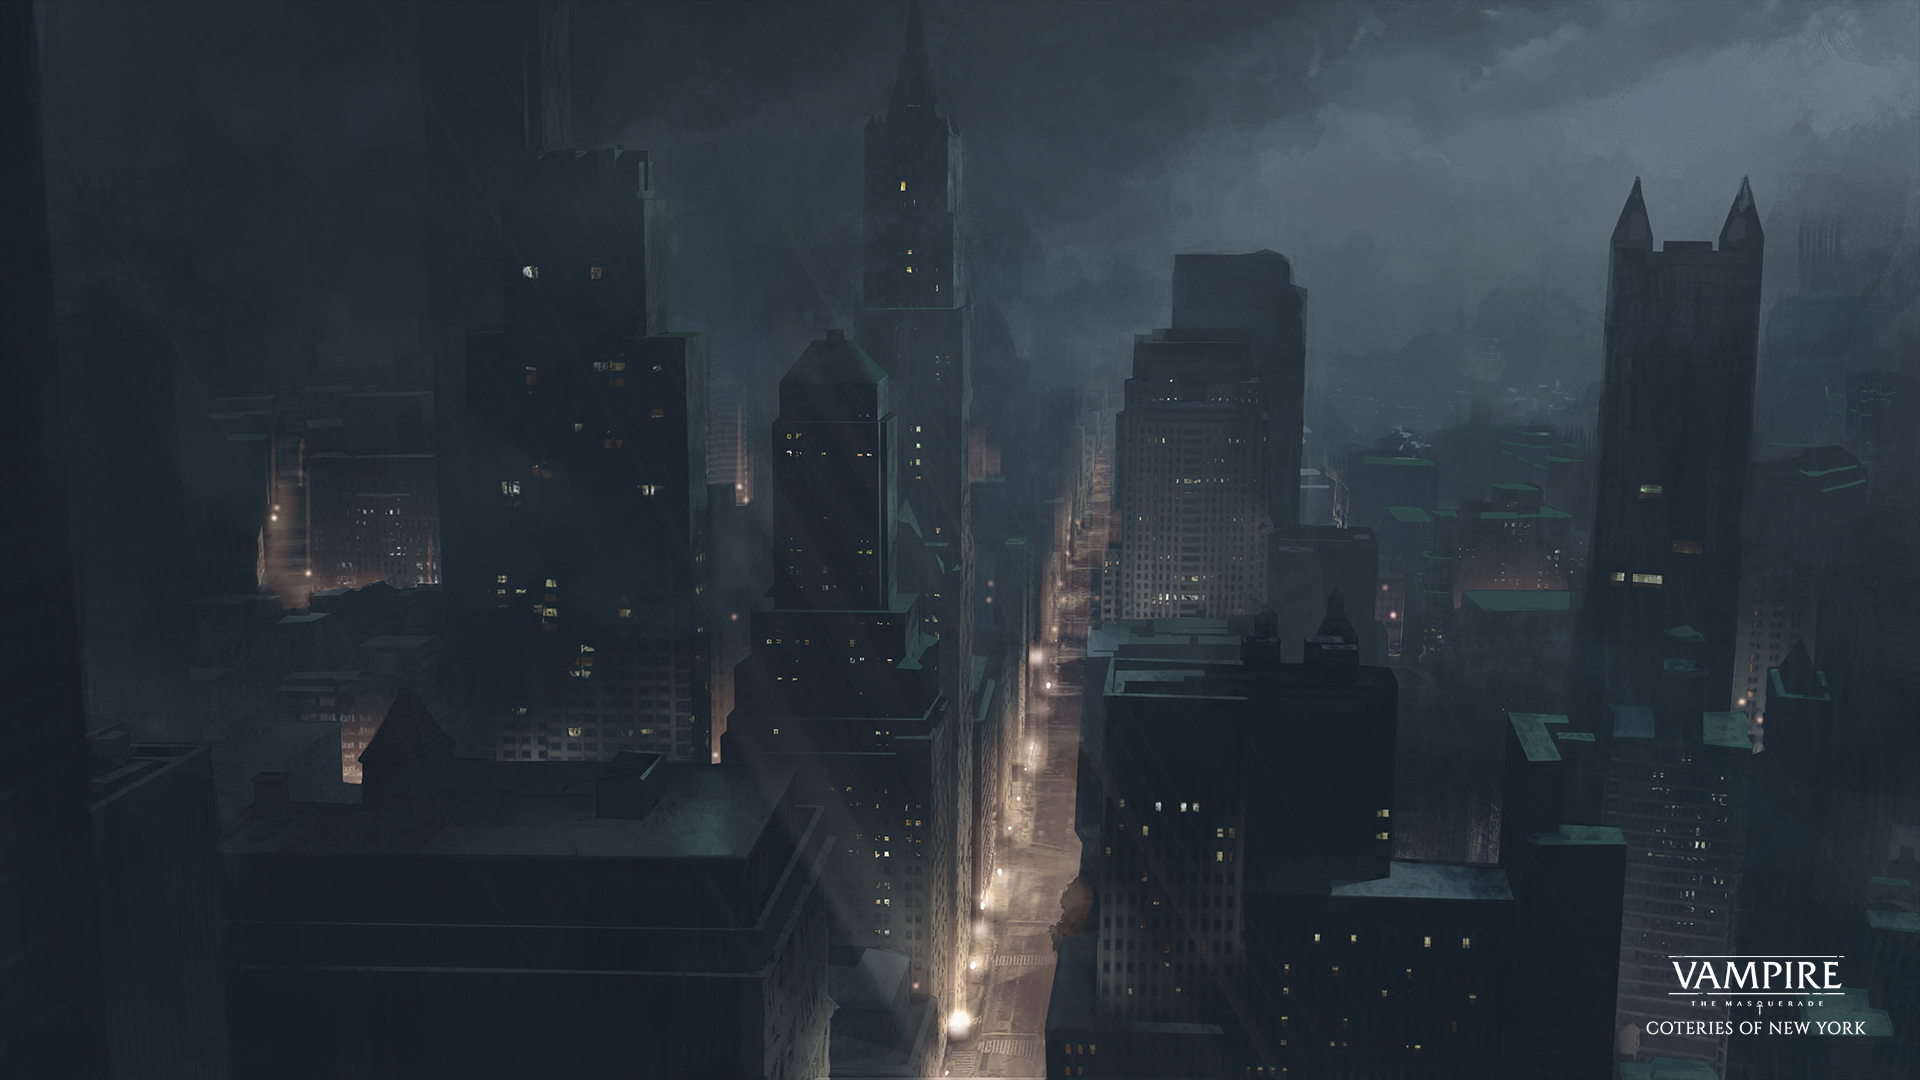 General 1920x1080 Vampire: The Masquerade Coteries of New York New York City city video games dark